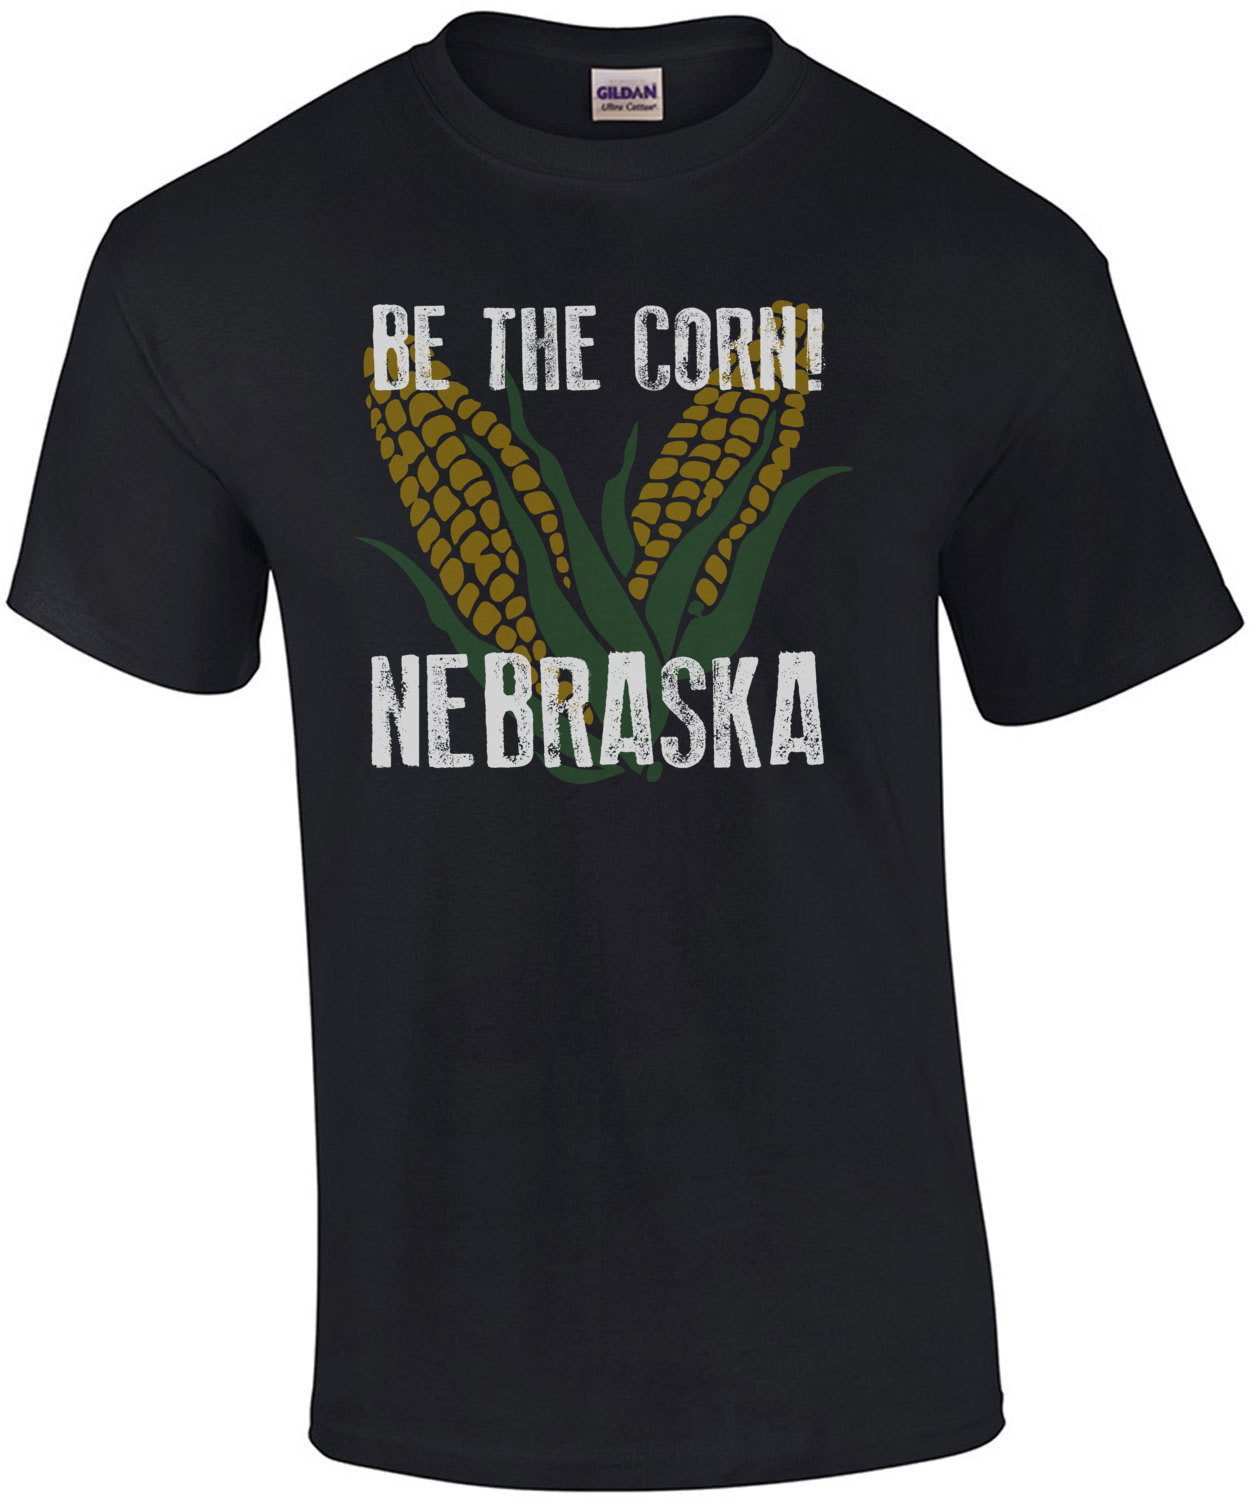 Be the corn - Nebraska T-Shirt